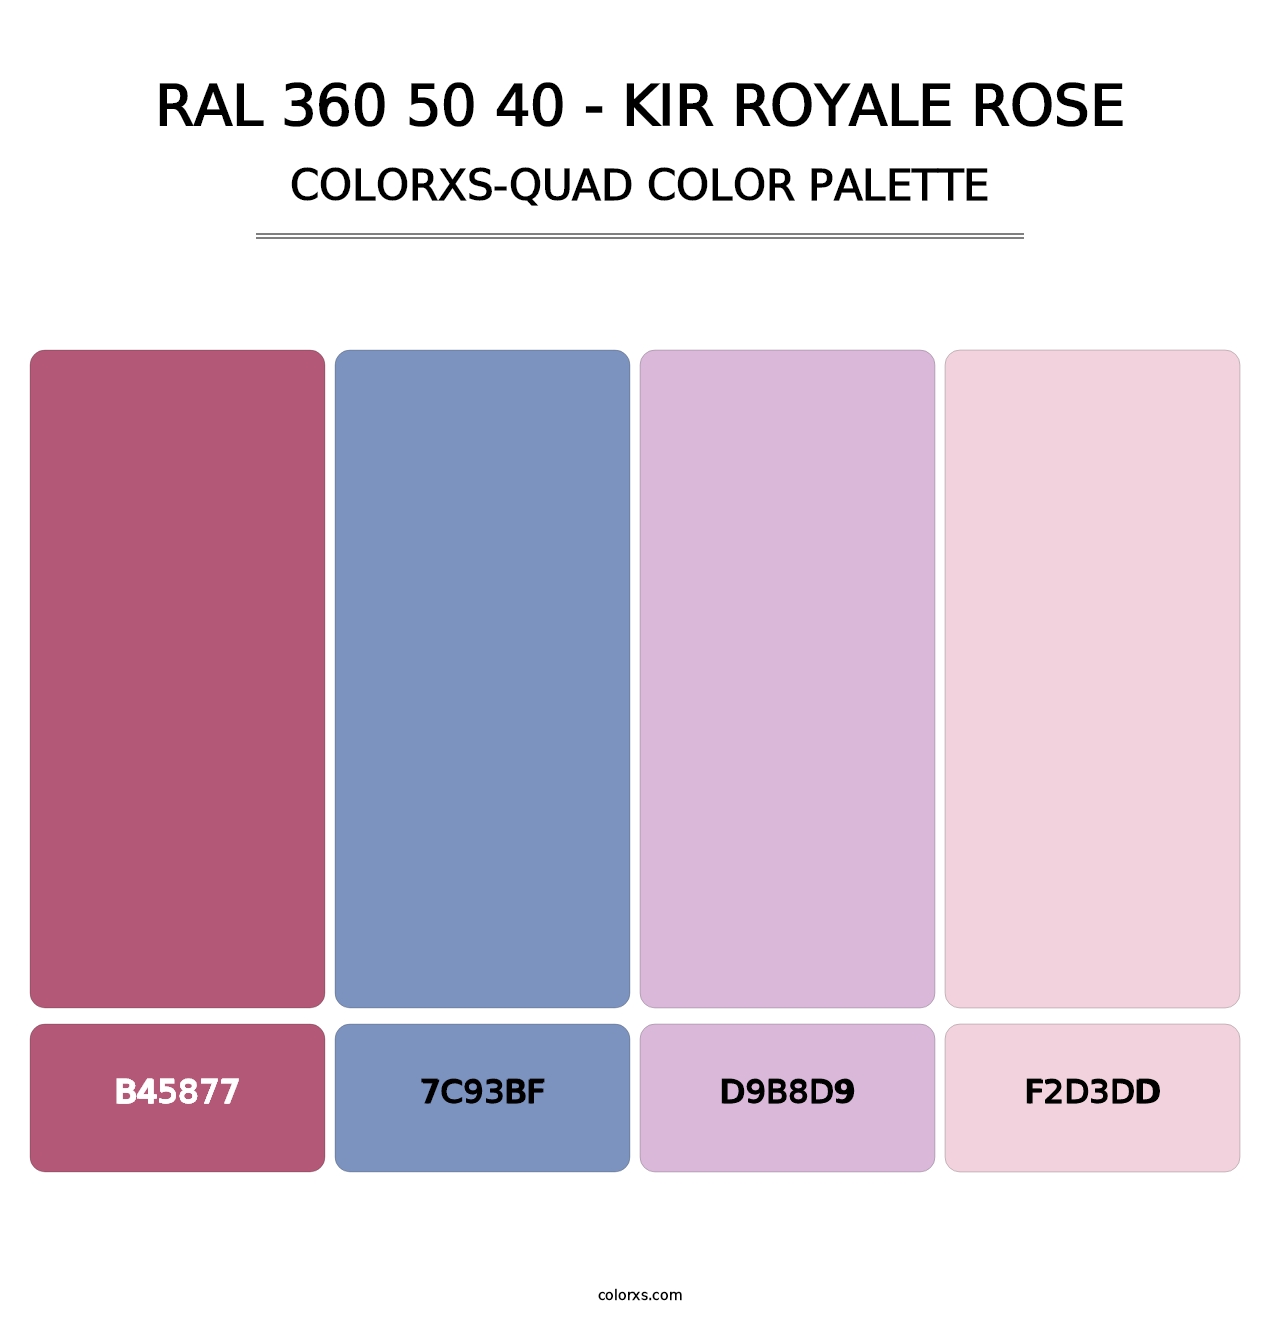 RAL 360 50 40 - Kir Royale Rose - Colorxs Quad Palette